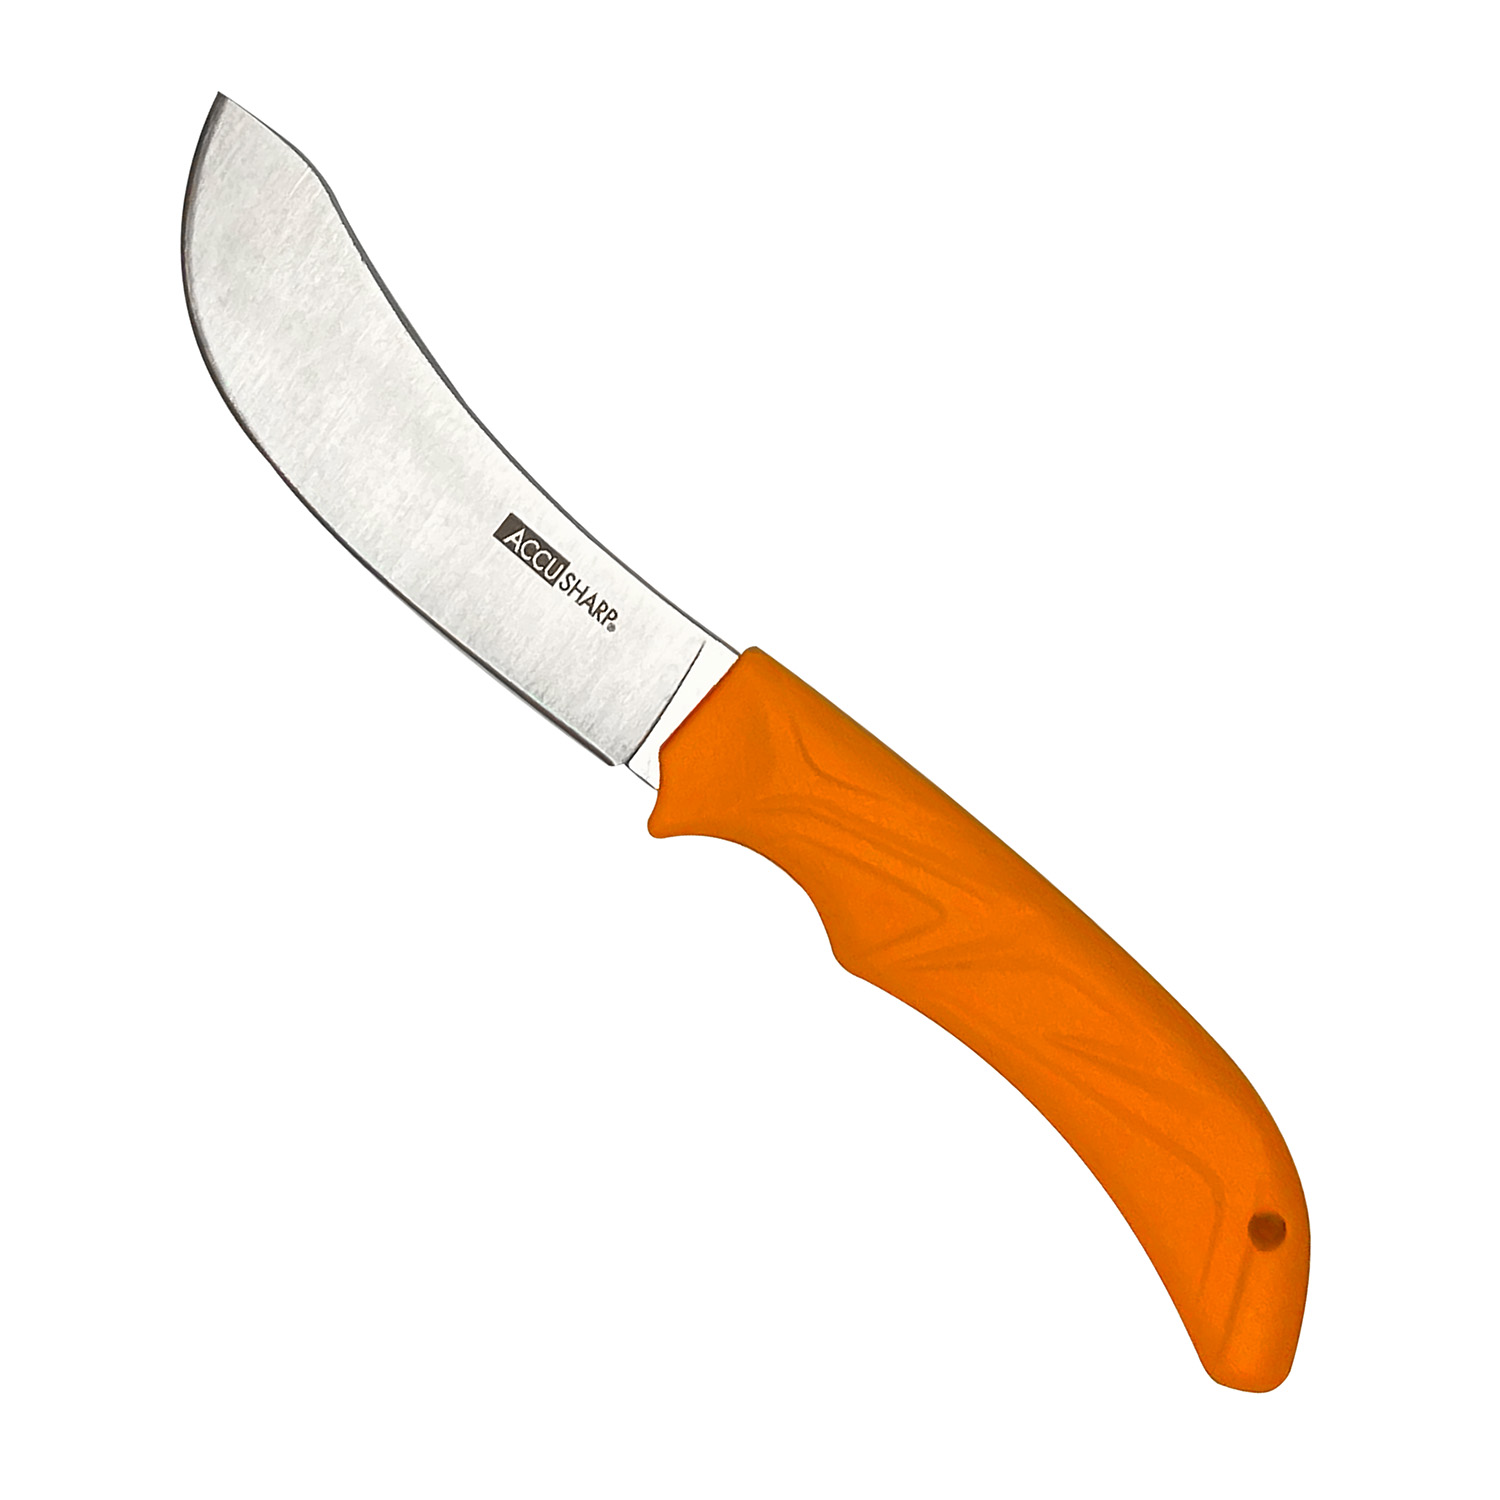 AccuSharp 2-Step Knife Sharpener & G10 Lockback Knife Combo Pack